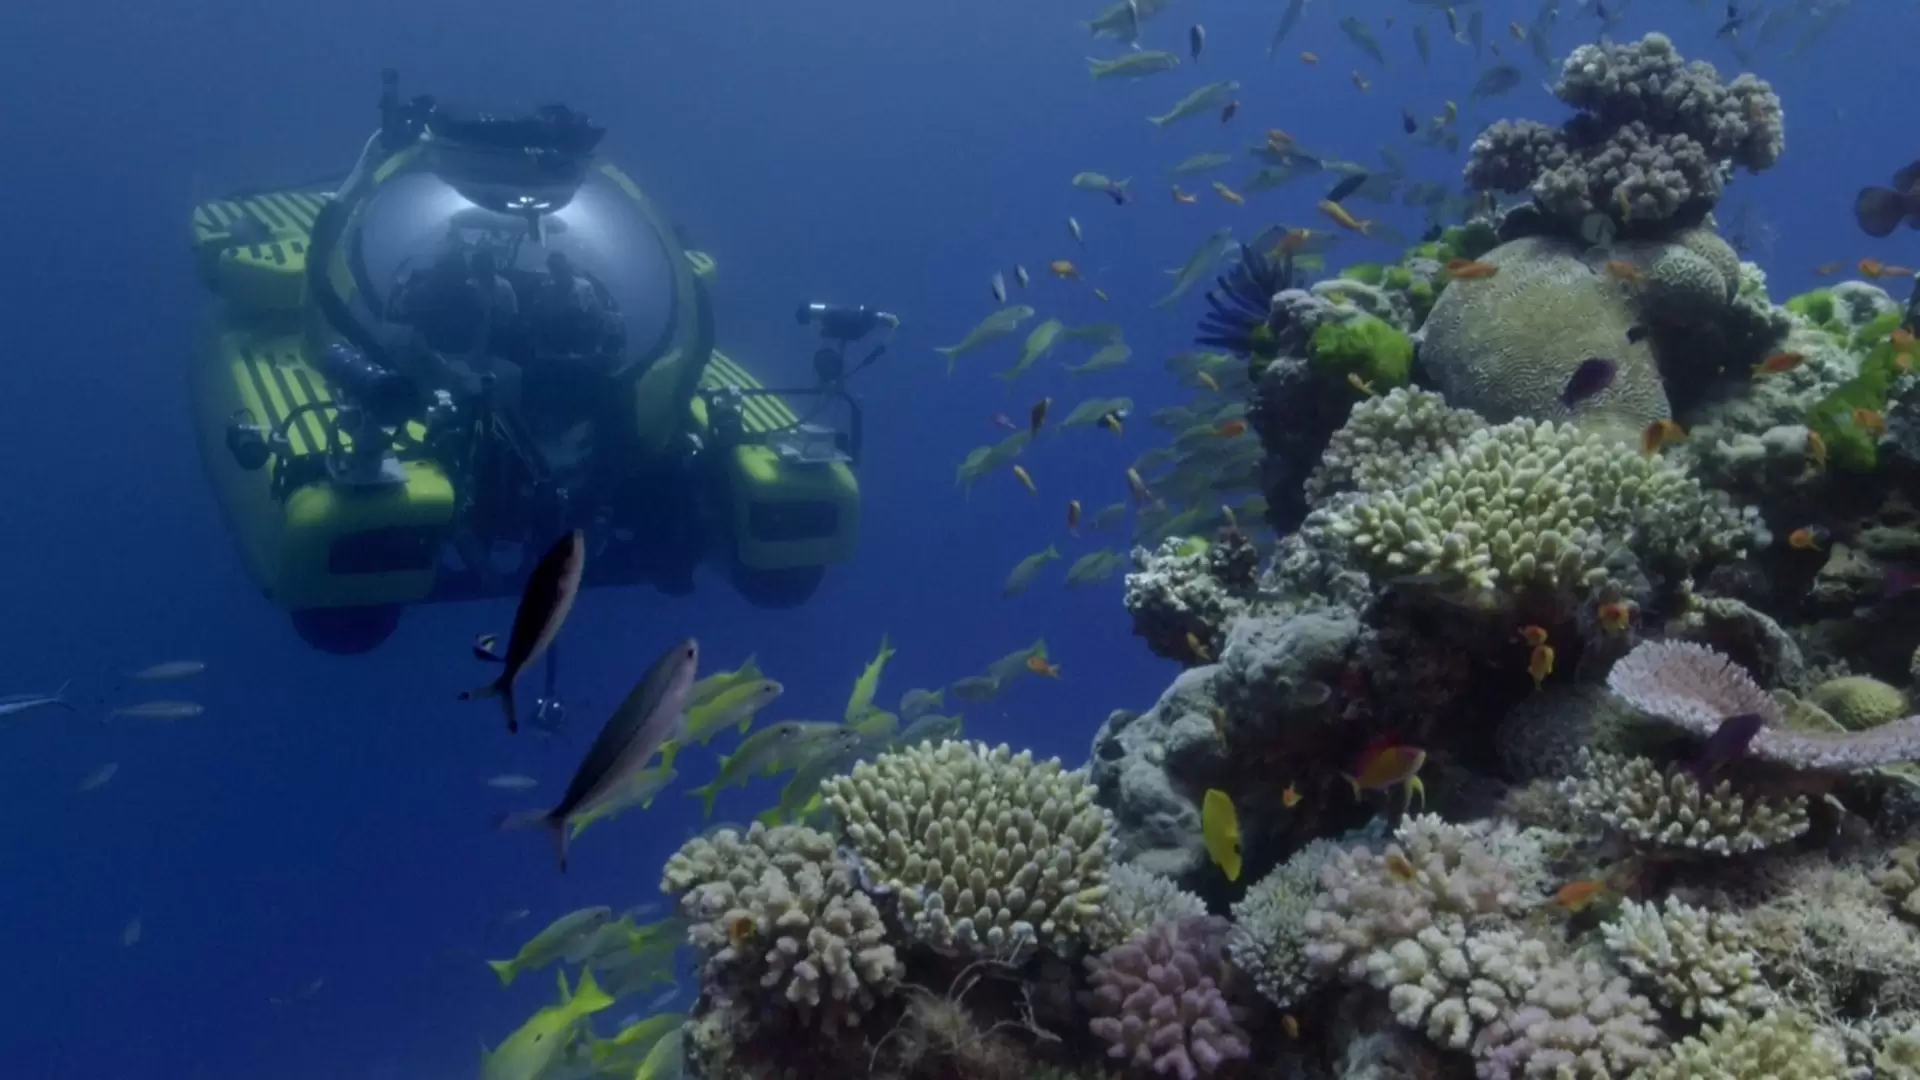 دانلود مستند Great Barrier Reef with David Attenborough 2015